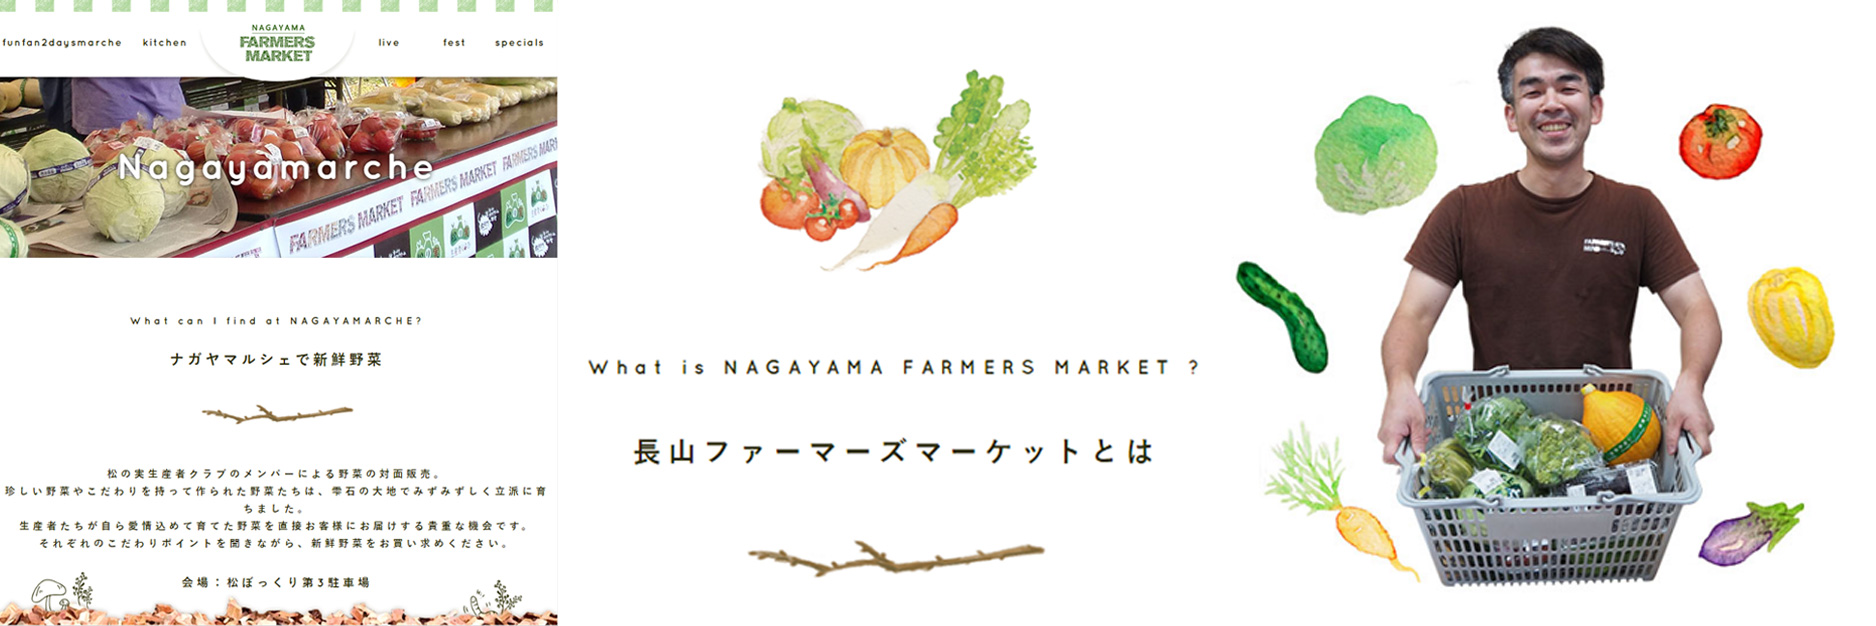 NAGAYAMA FARMERS MARKET WEBデザイン